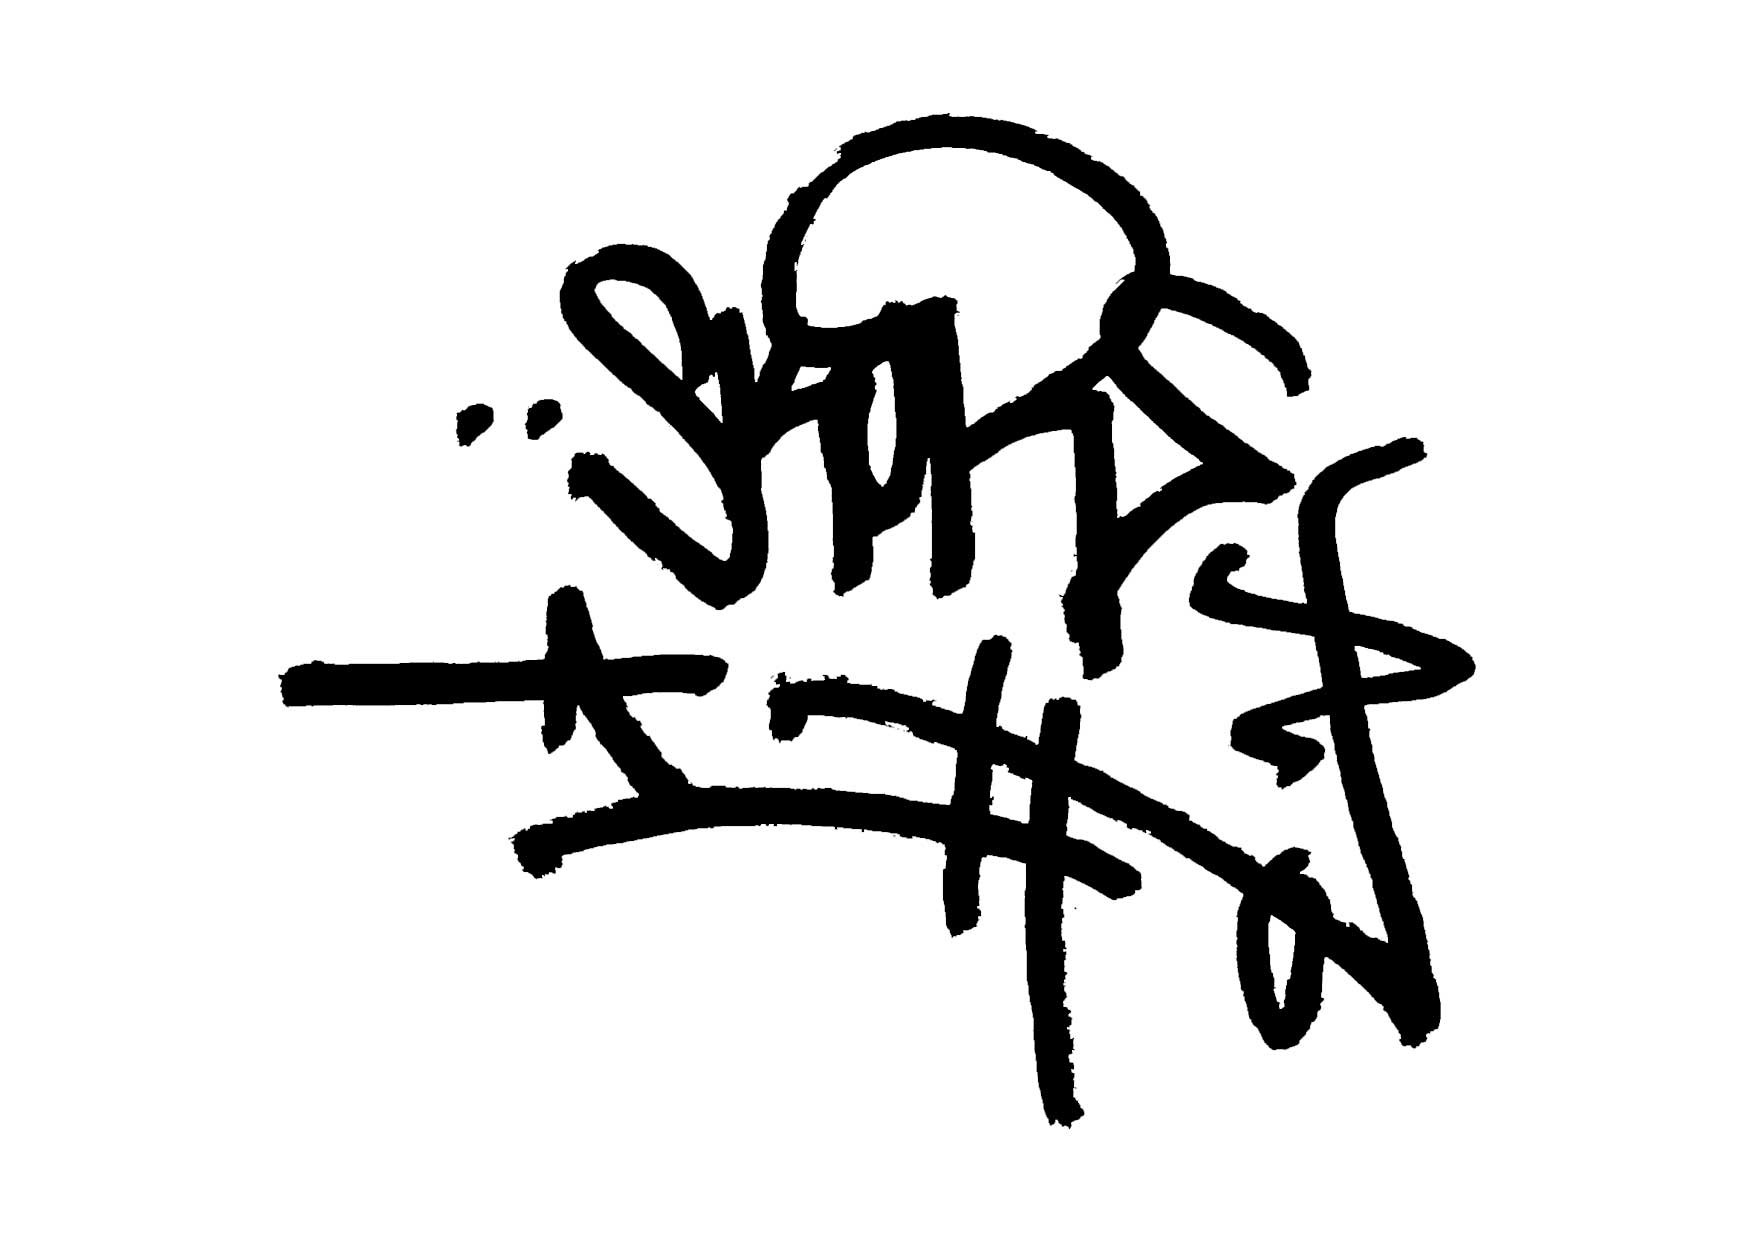 Graffiti Writer SKORE tag